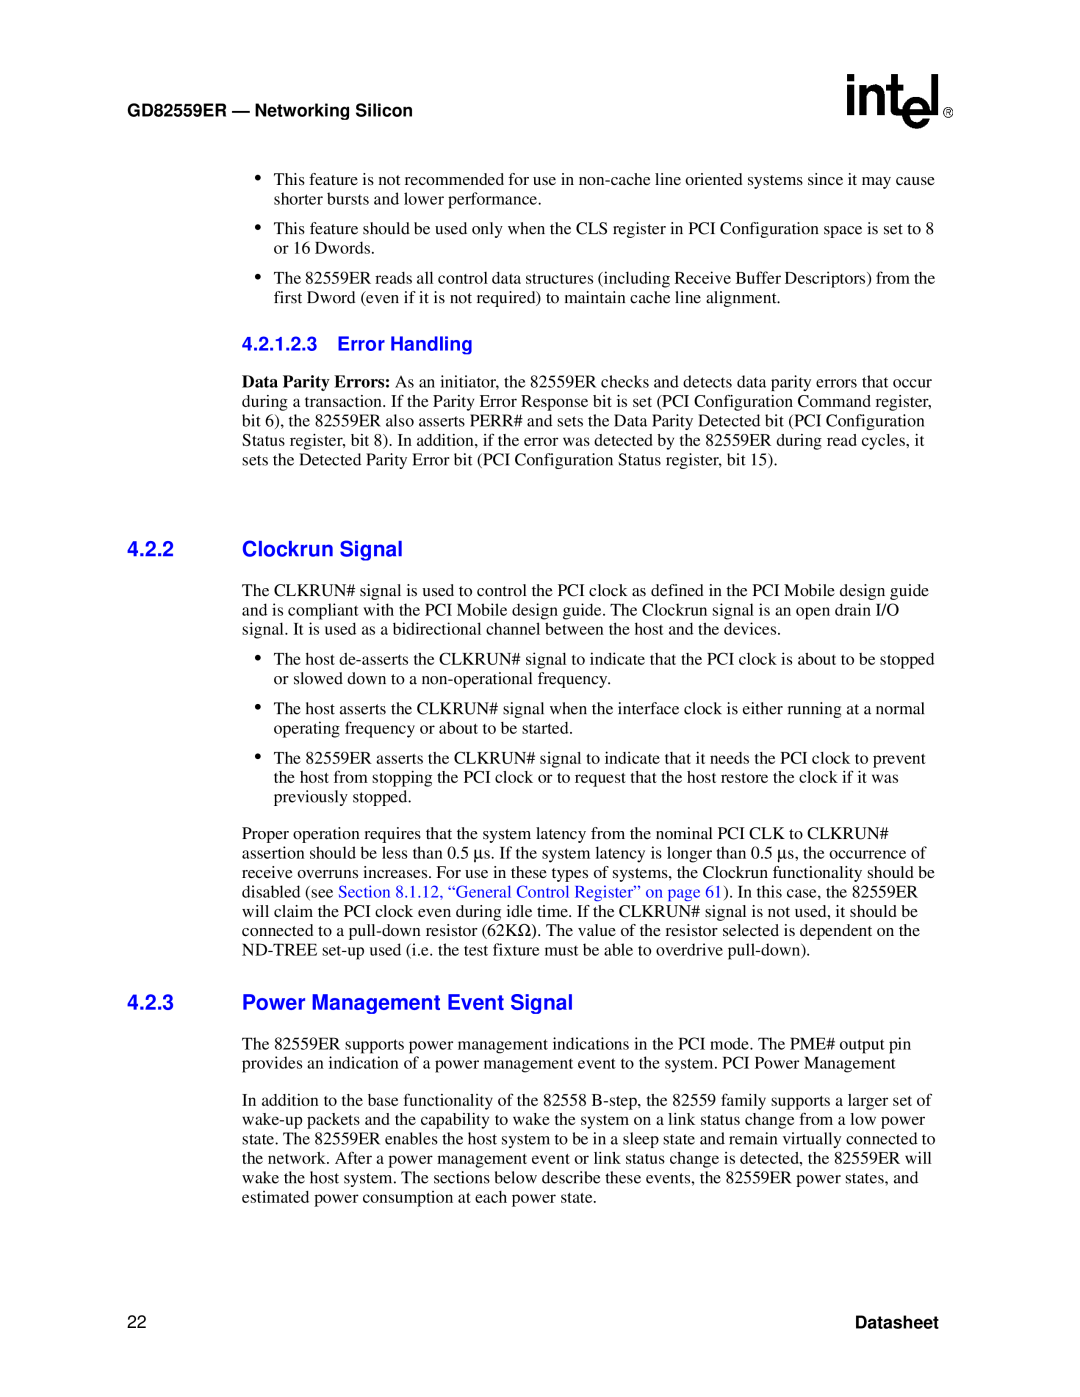 Intel manual Clockrun Signal, Power Management Event Signal, Error Handling, GD82559ER - Networkin g Silicon, Datasheet 